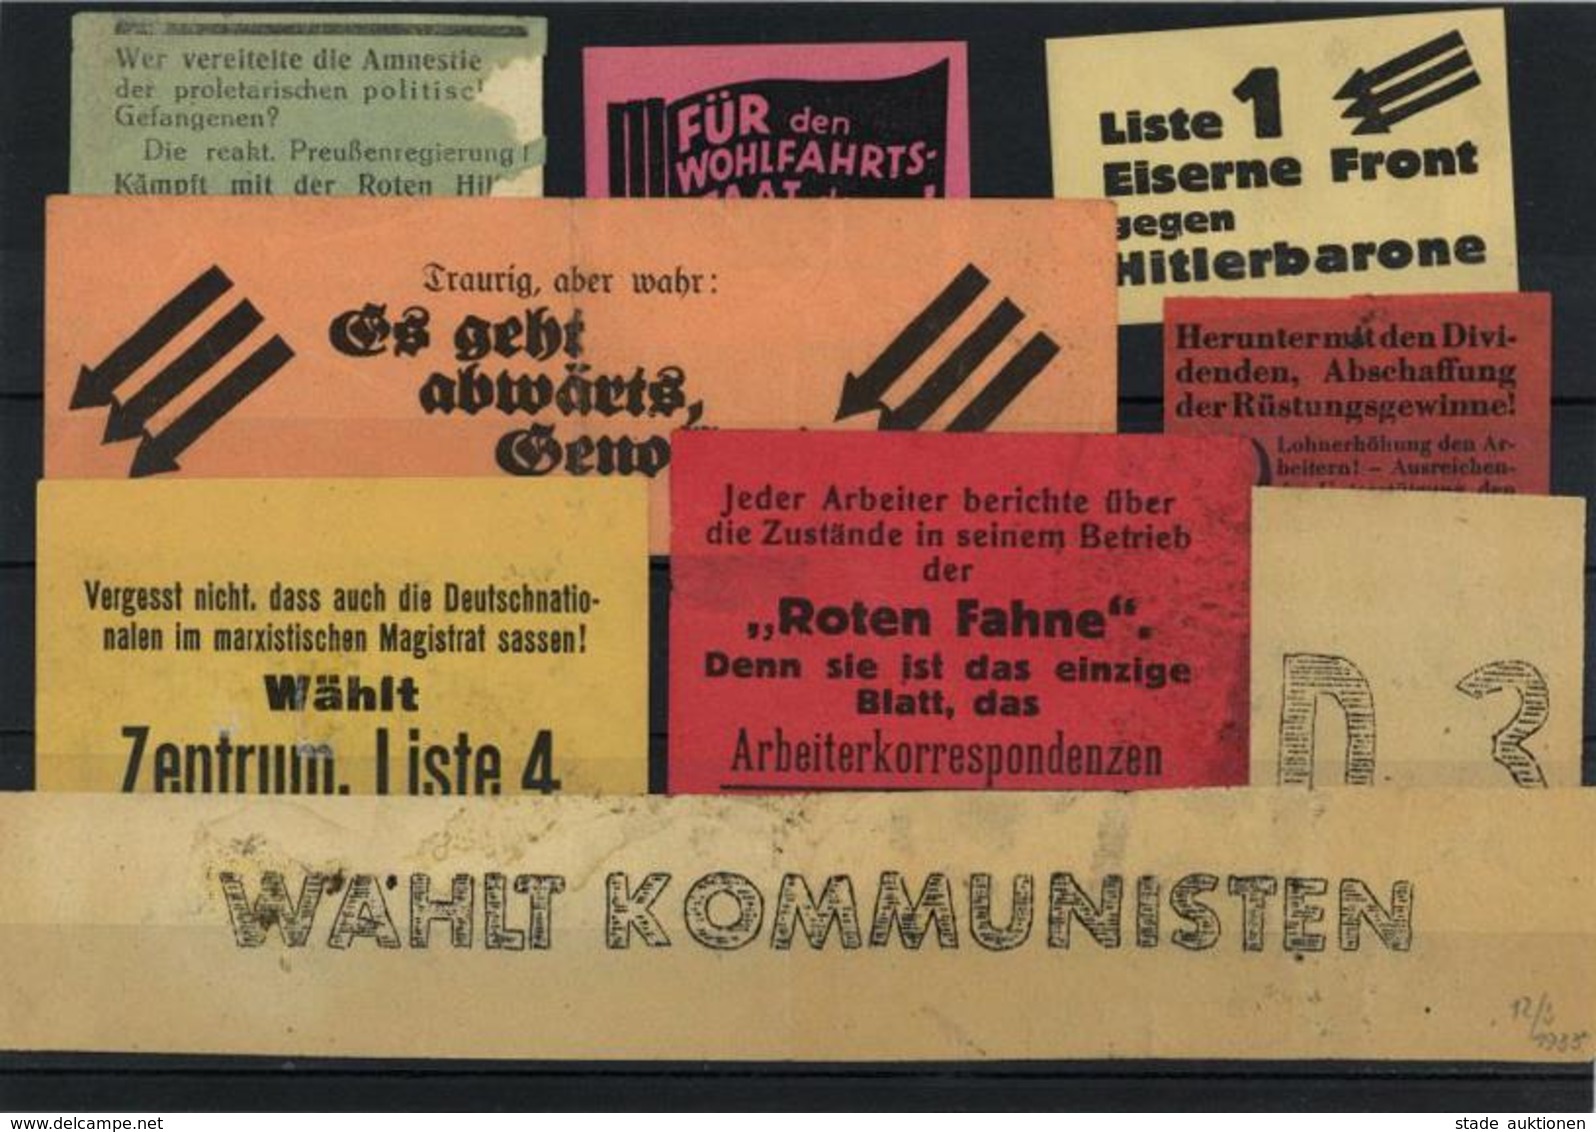 Anti Propaganda WK II Kommunistische Partei I-II - War 1939-45